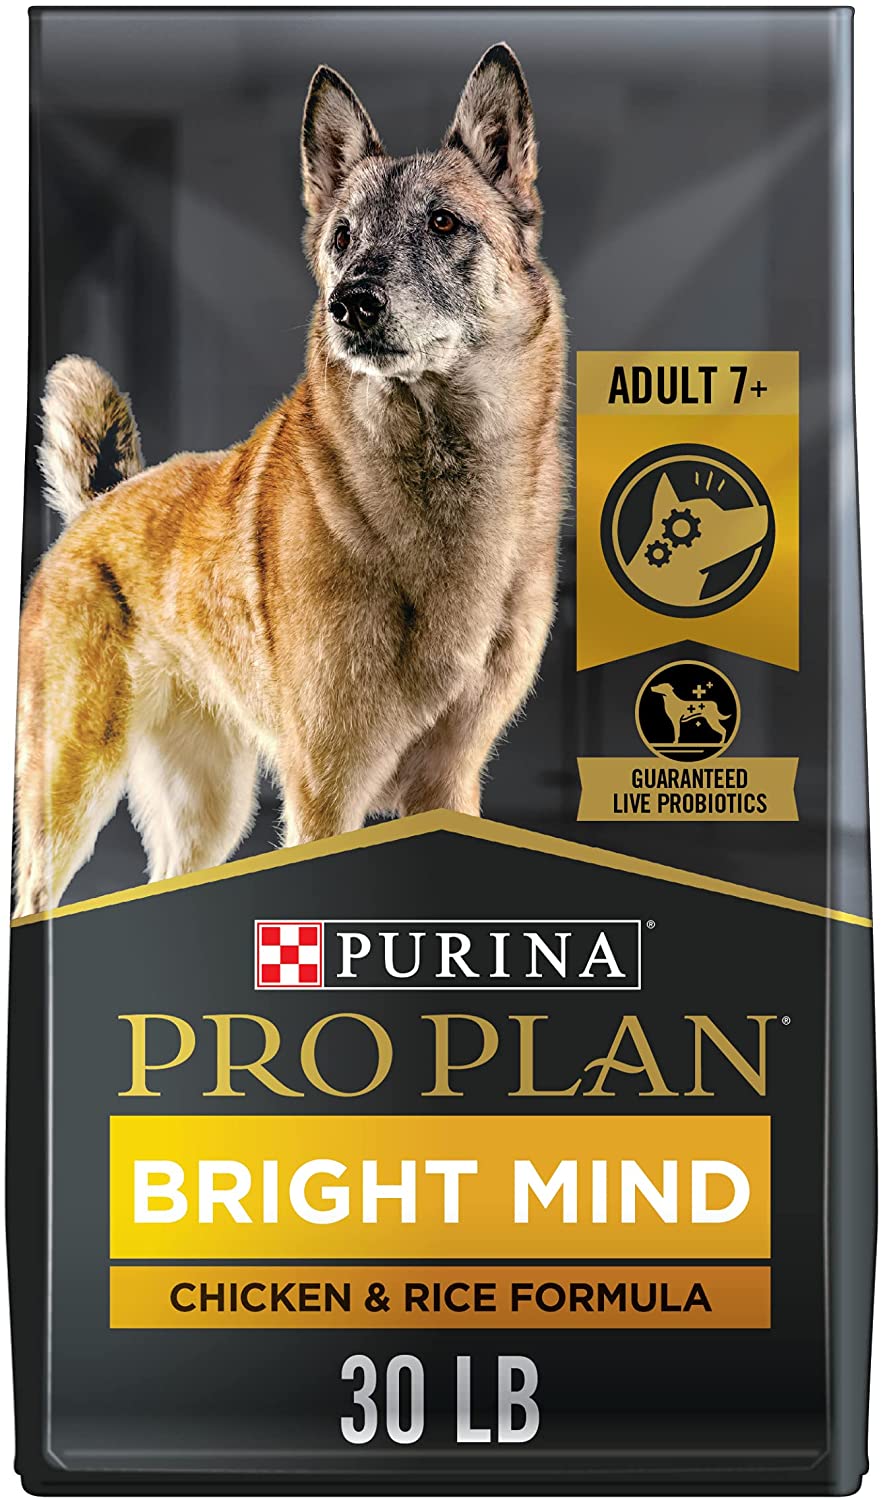 Purina-Pro-Plan-Bright-Mind-Dog-Food